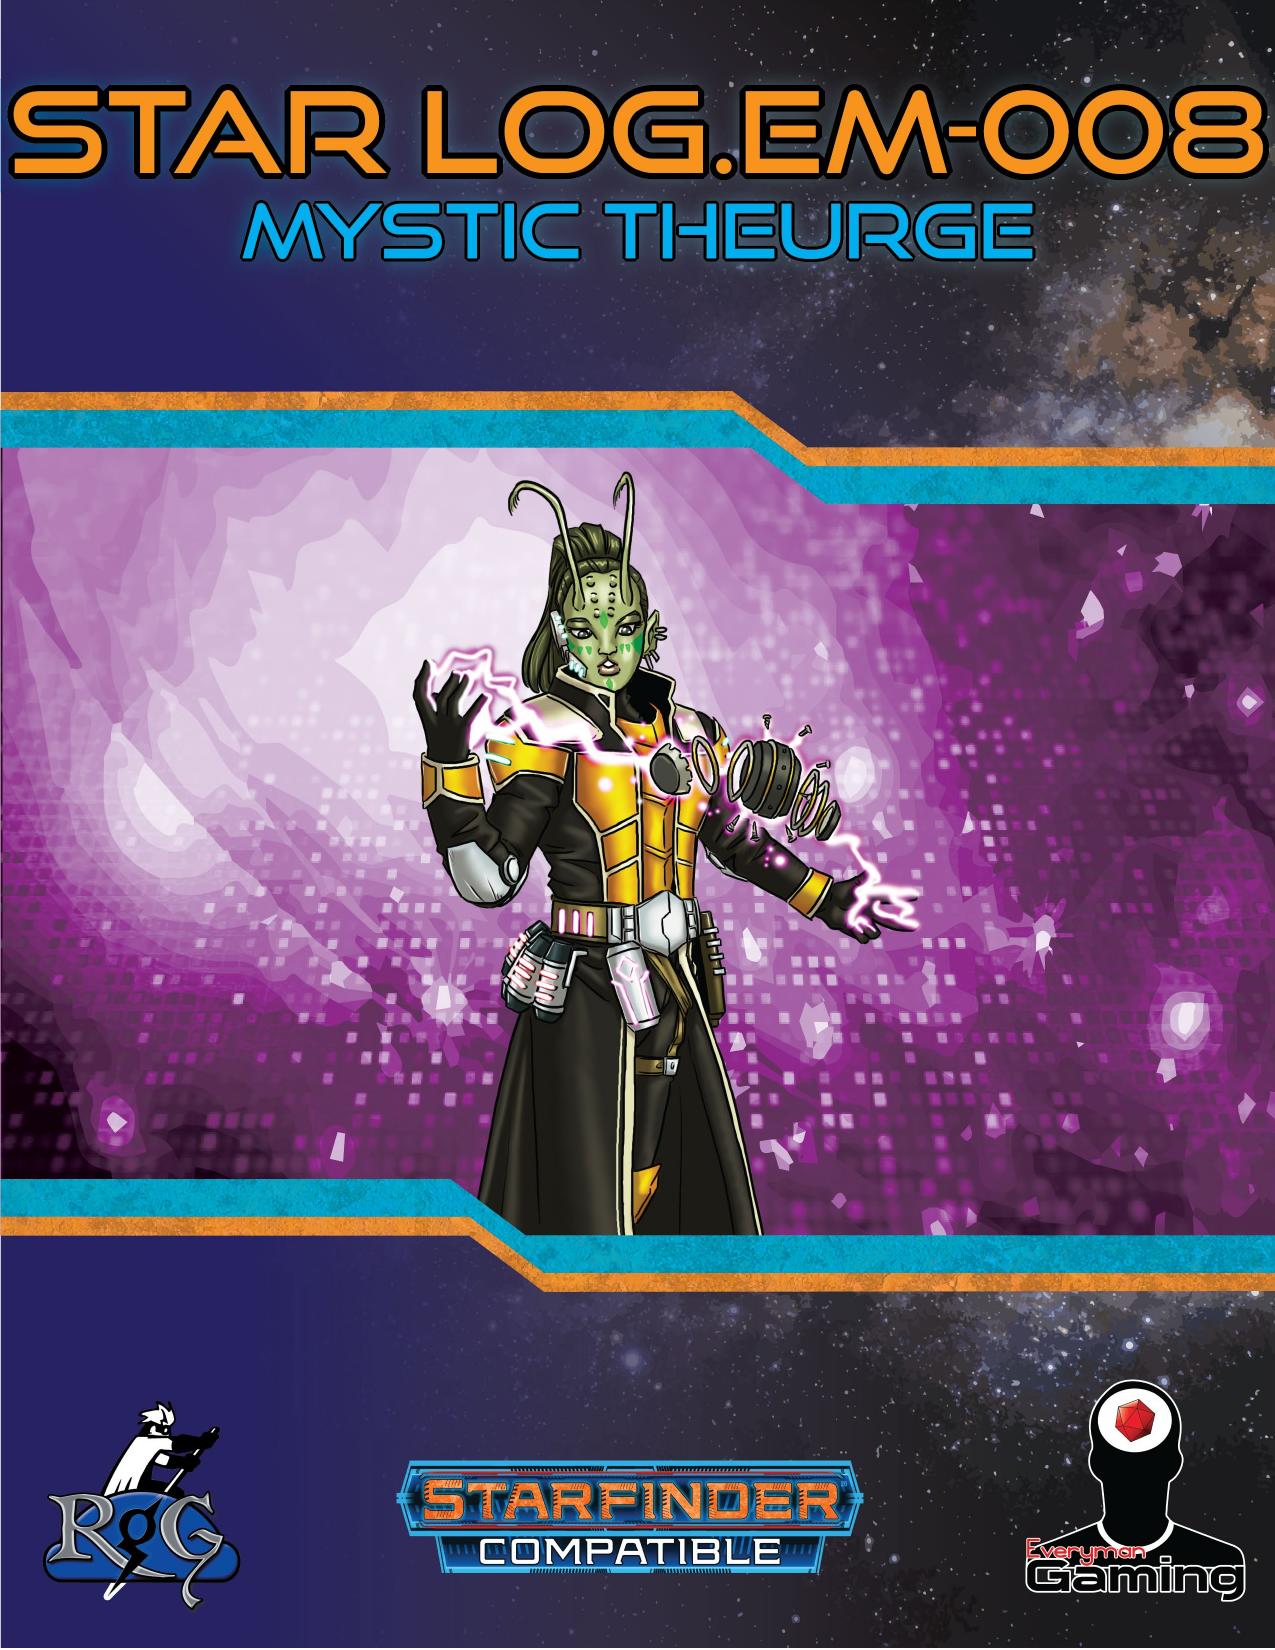 Star LogEM-008 Mystic Theurge